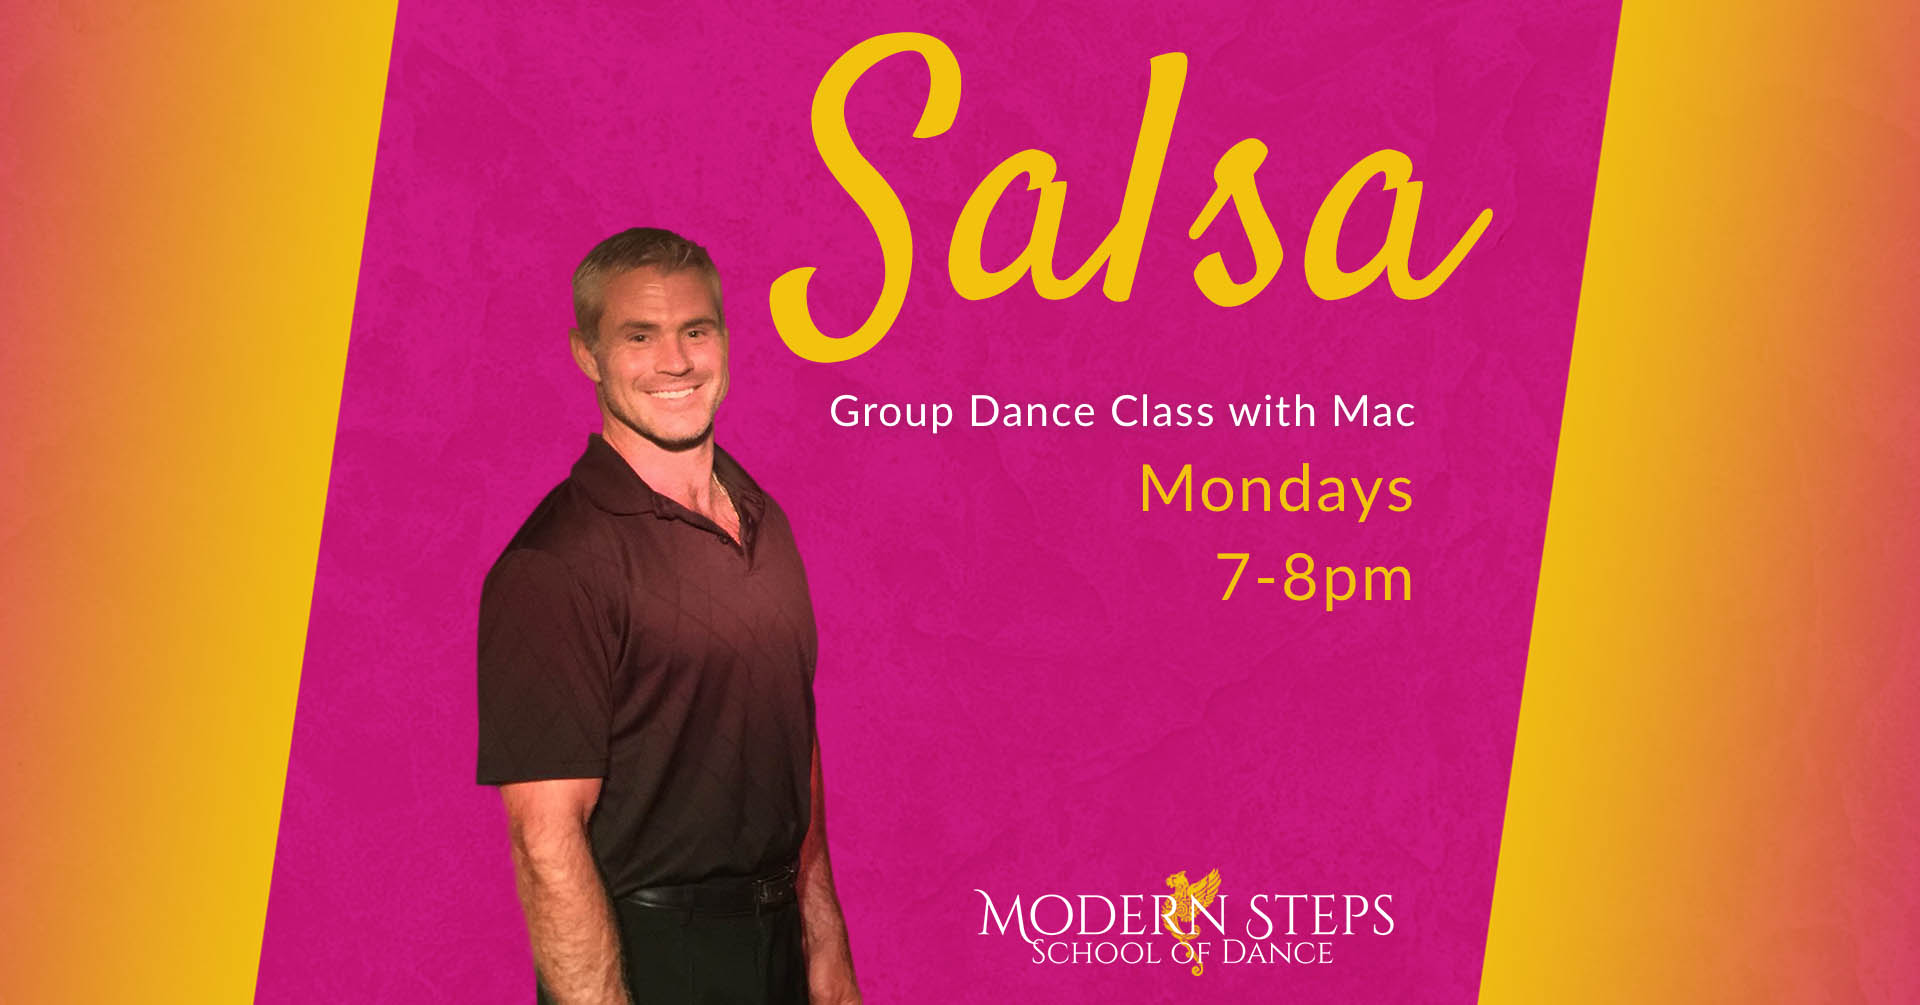 Naples Ballroom Dance Lessons - Salsa Dancing - Modern Steps School of Dance - Naples Florida - Naples Florida Things to Do